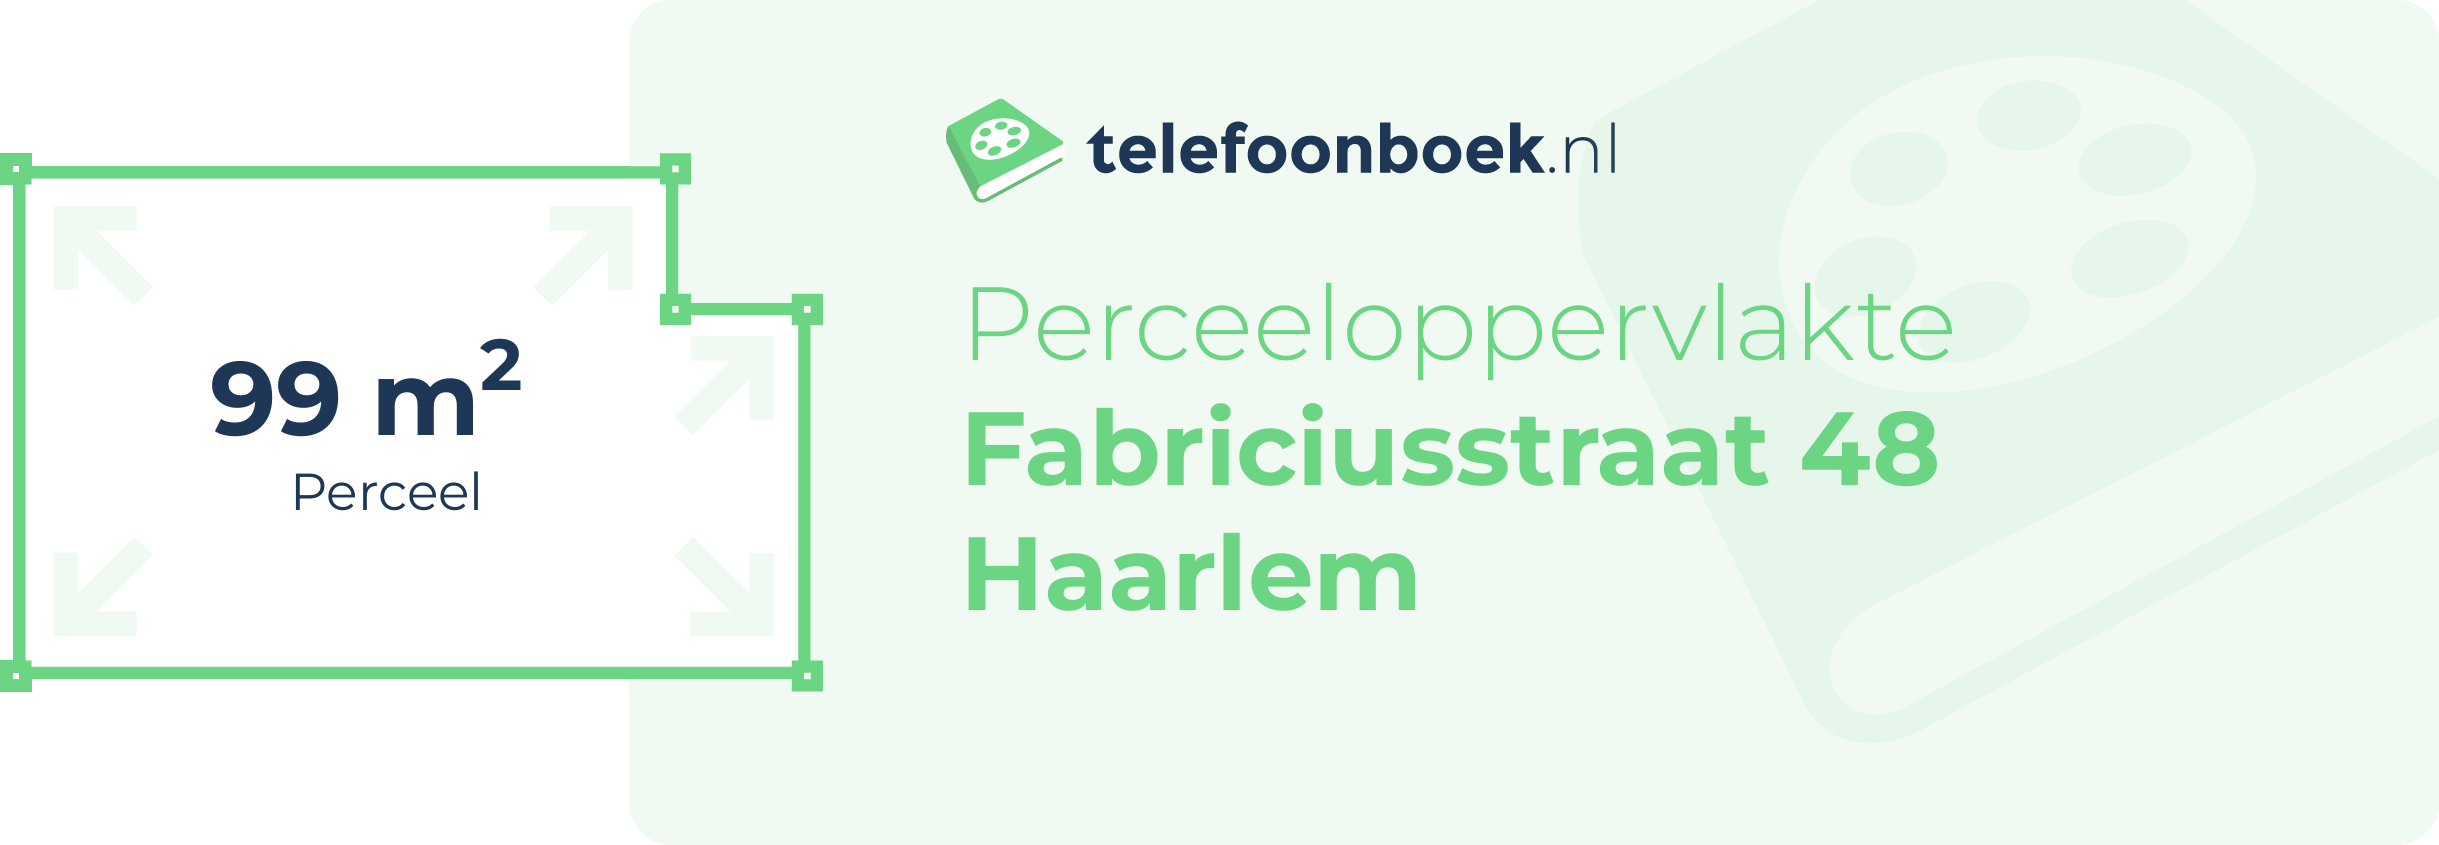 Perceeloppervlakte Fabriciusstraat 48 Haarlem